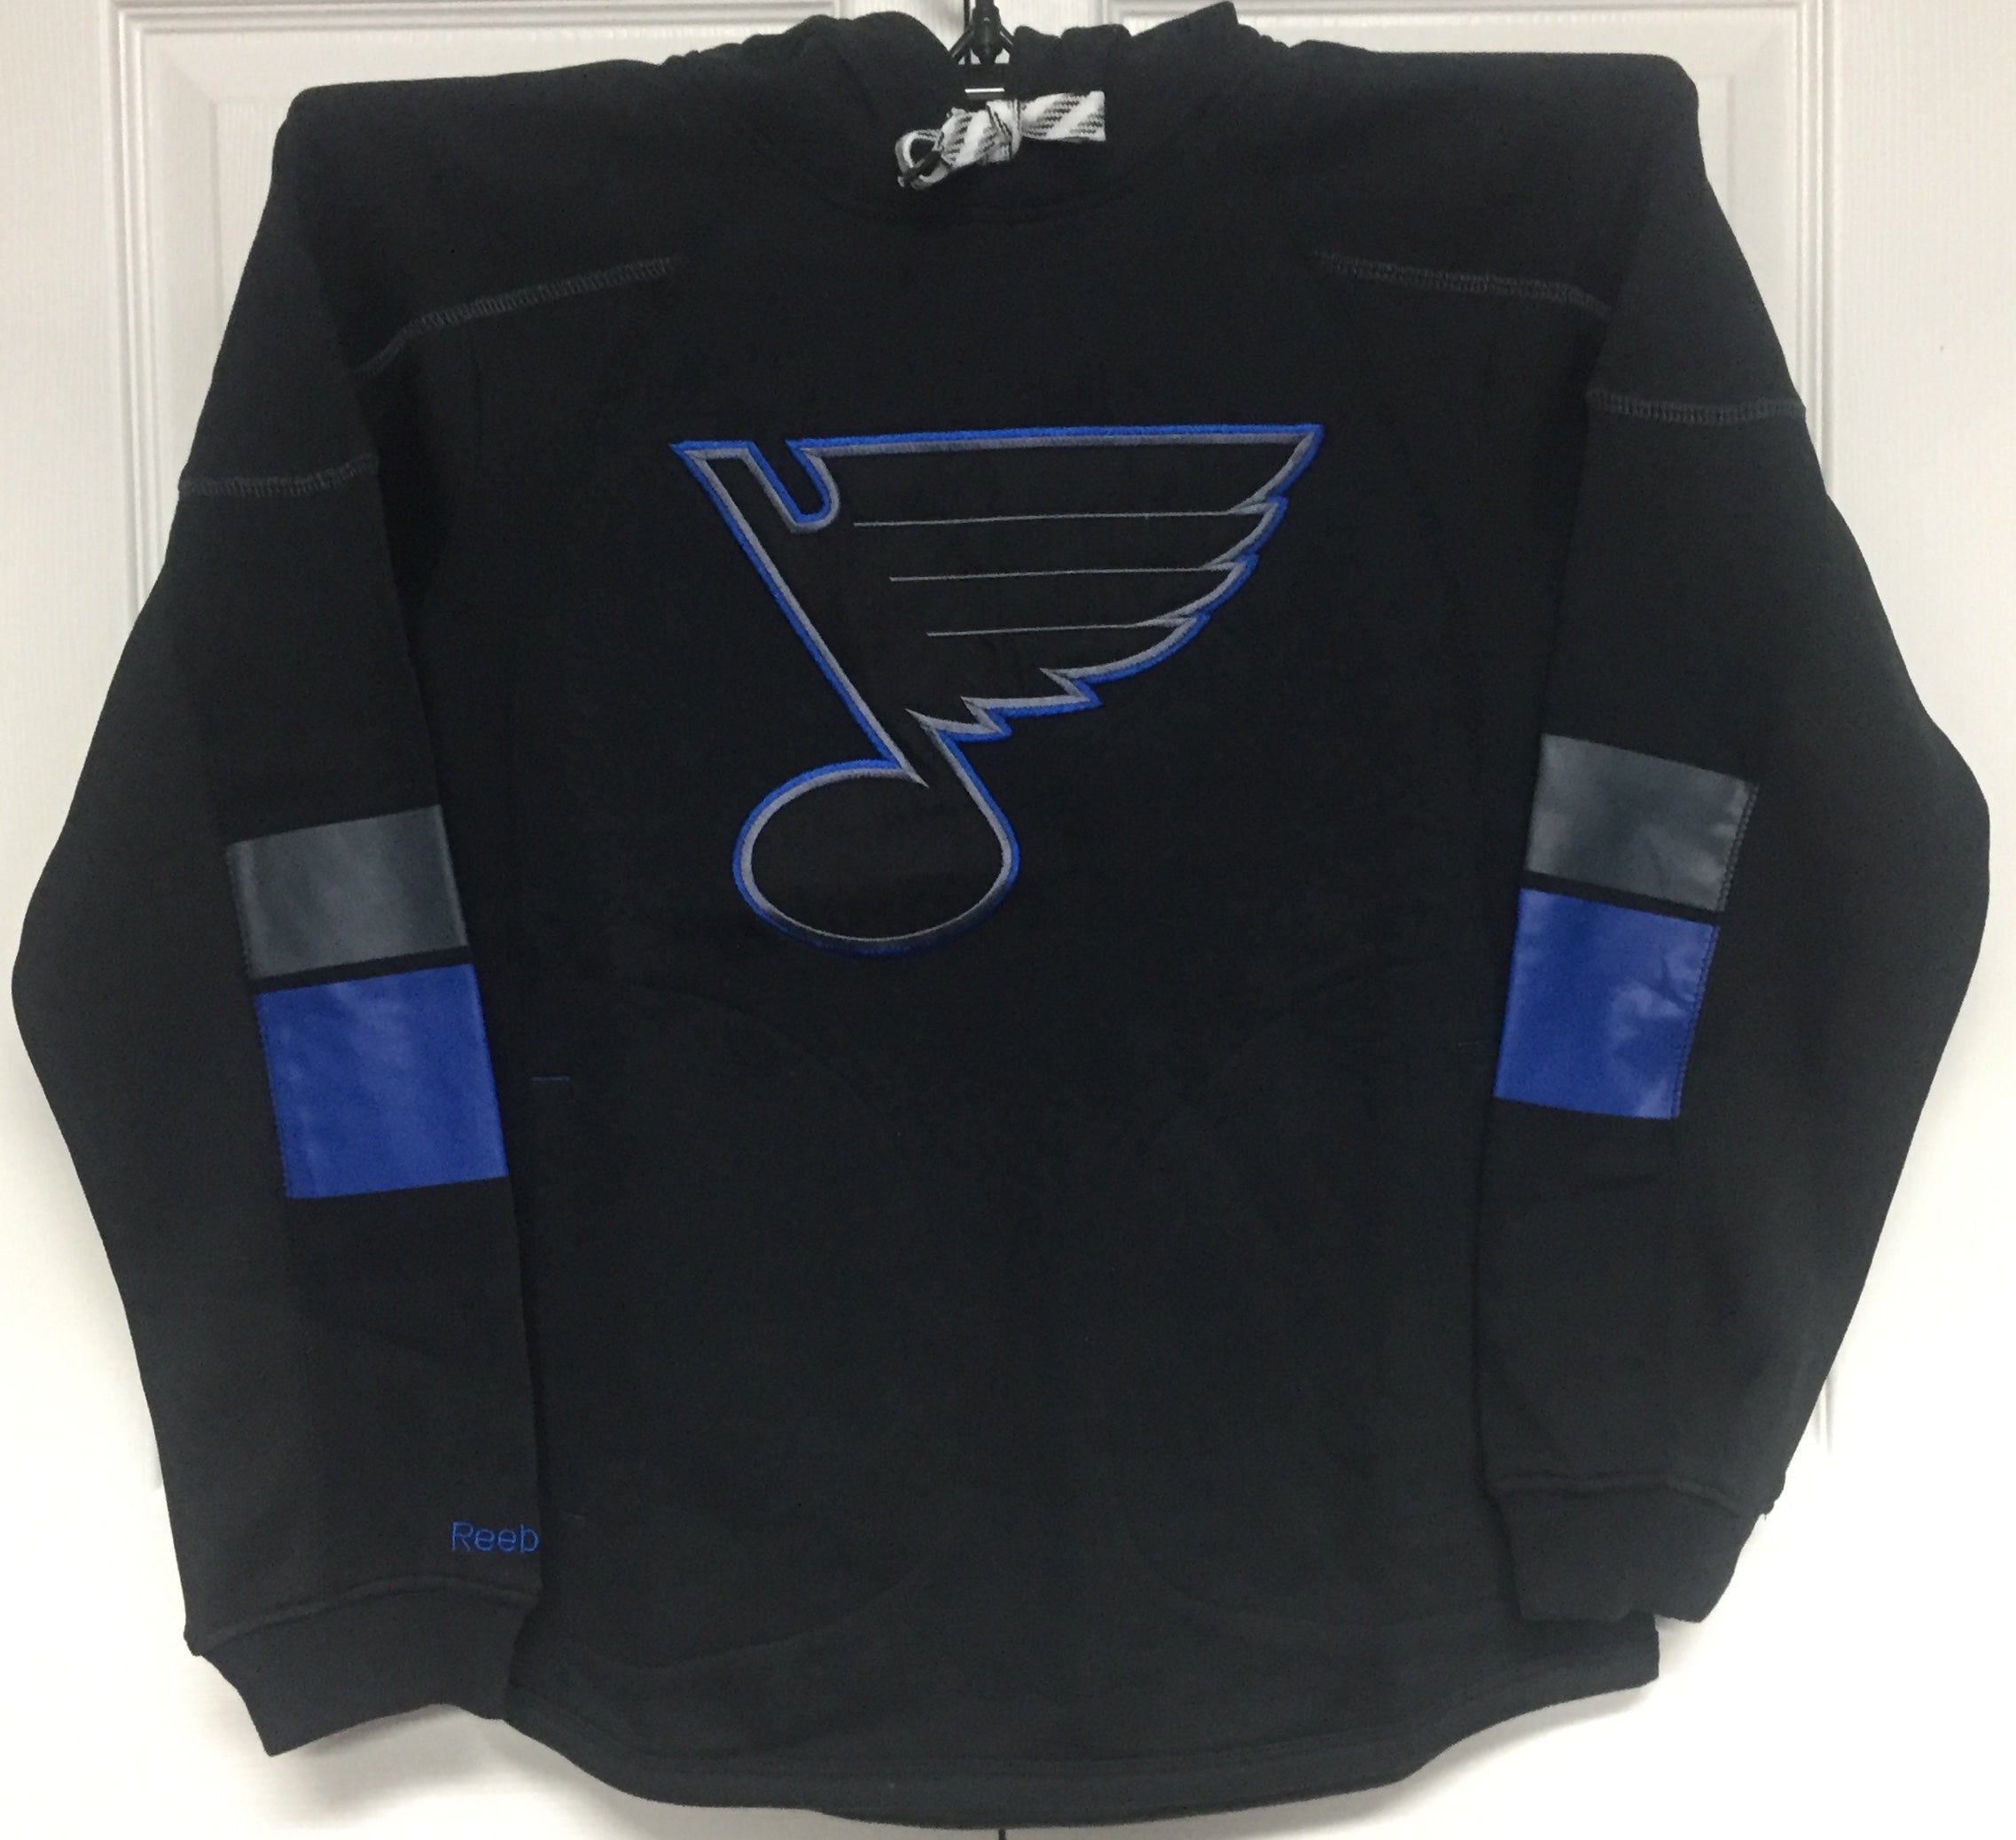 Men's adidas Blue St. Louis Blues Platinum Long Sleeve Jersey T-Shirt